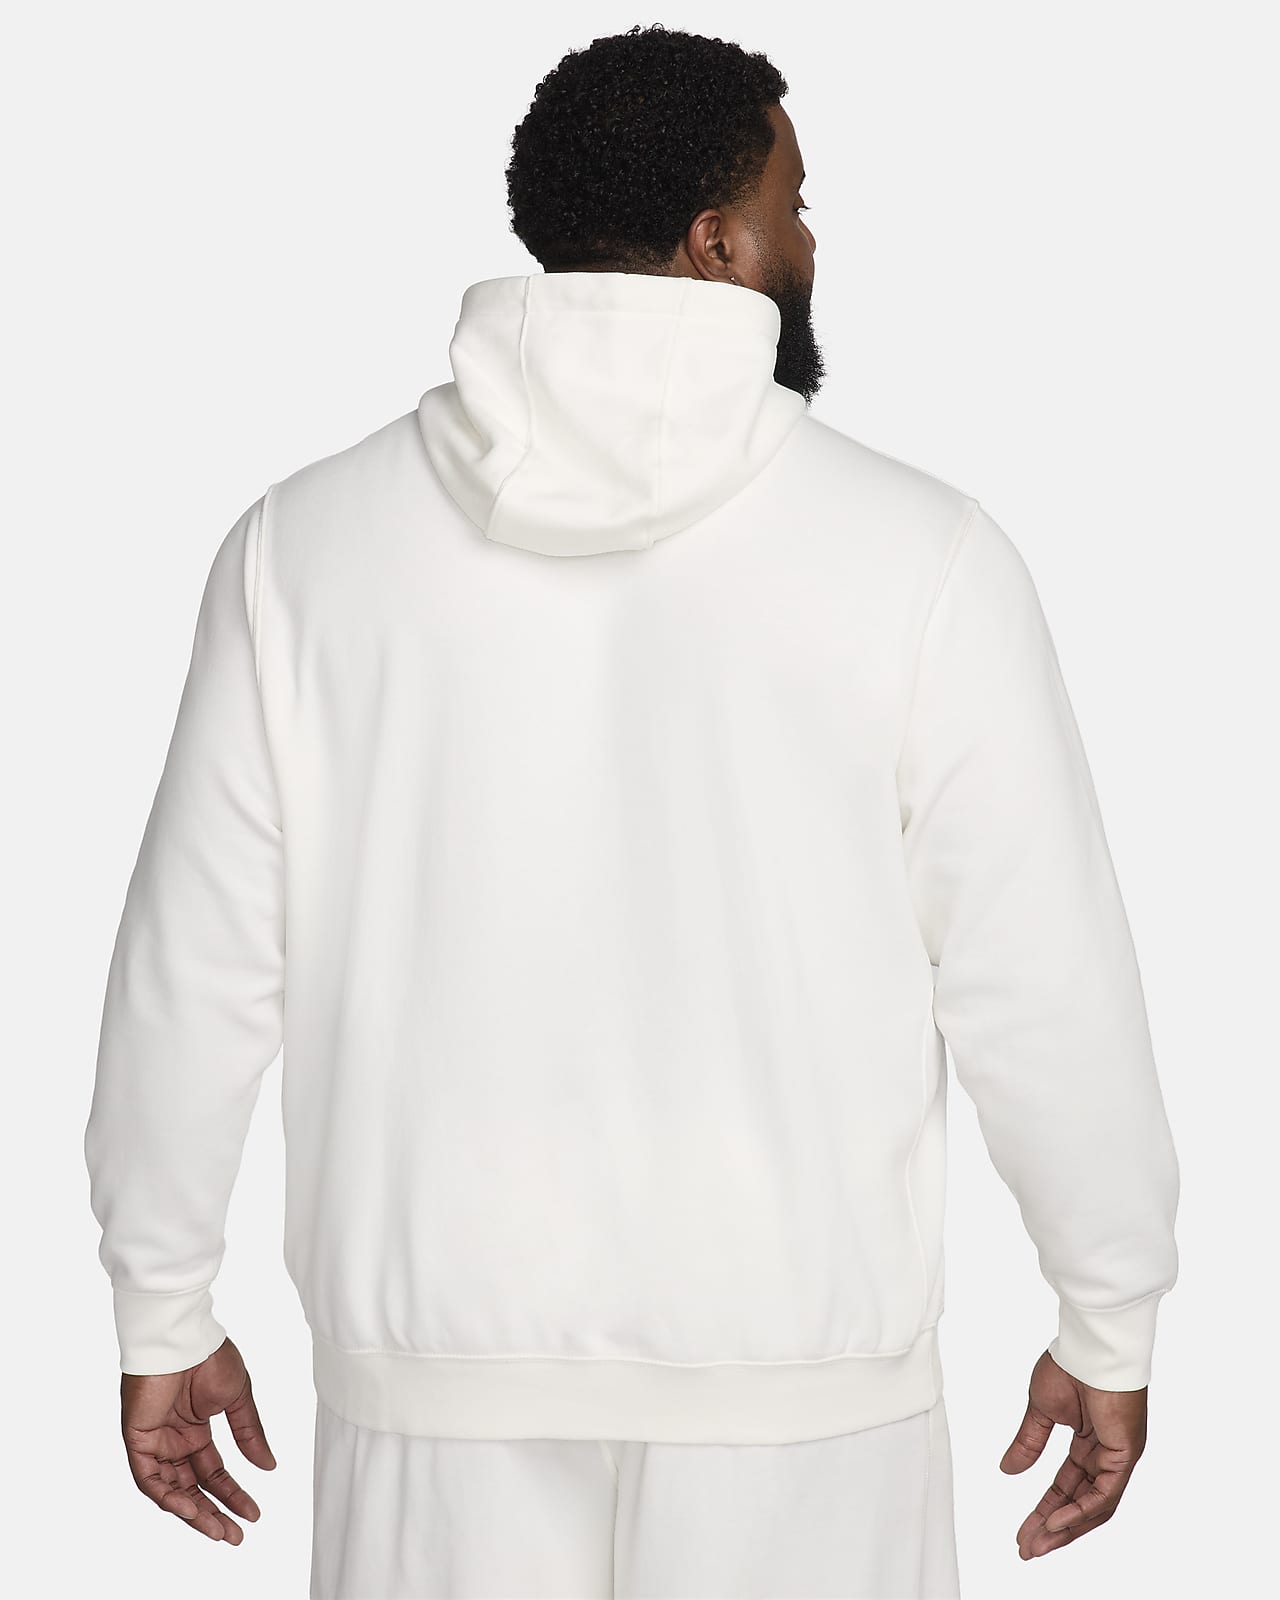 Hooded sweatshirt Nike Sportswear Club Fleece Pullover Hoodie 